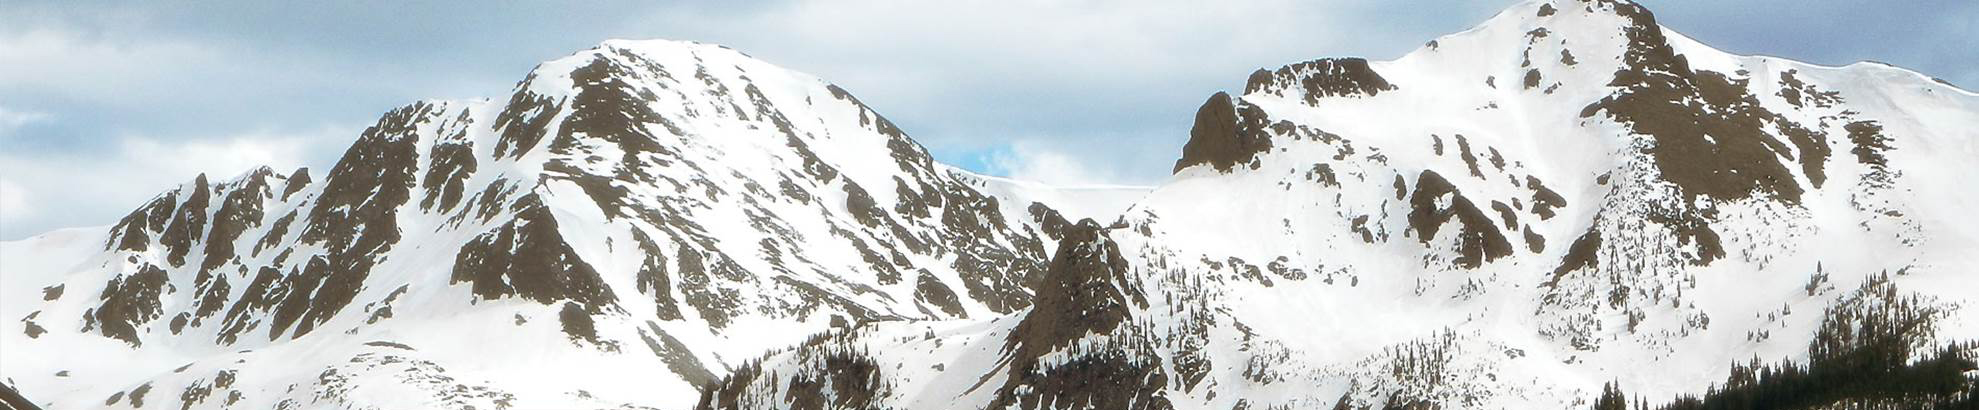 Snowy mountain range